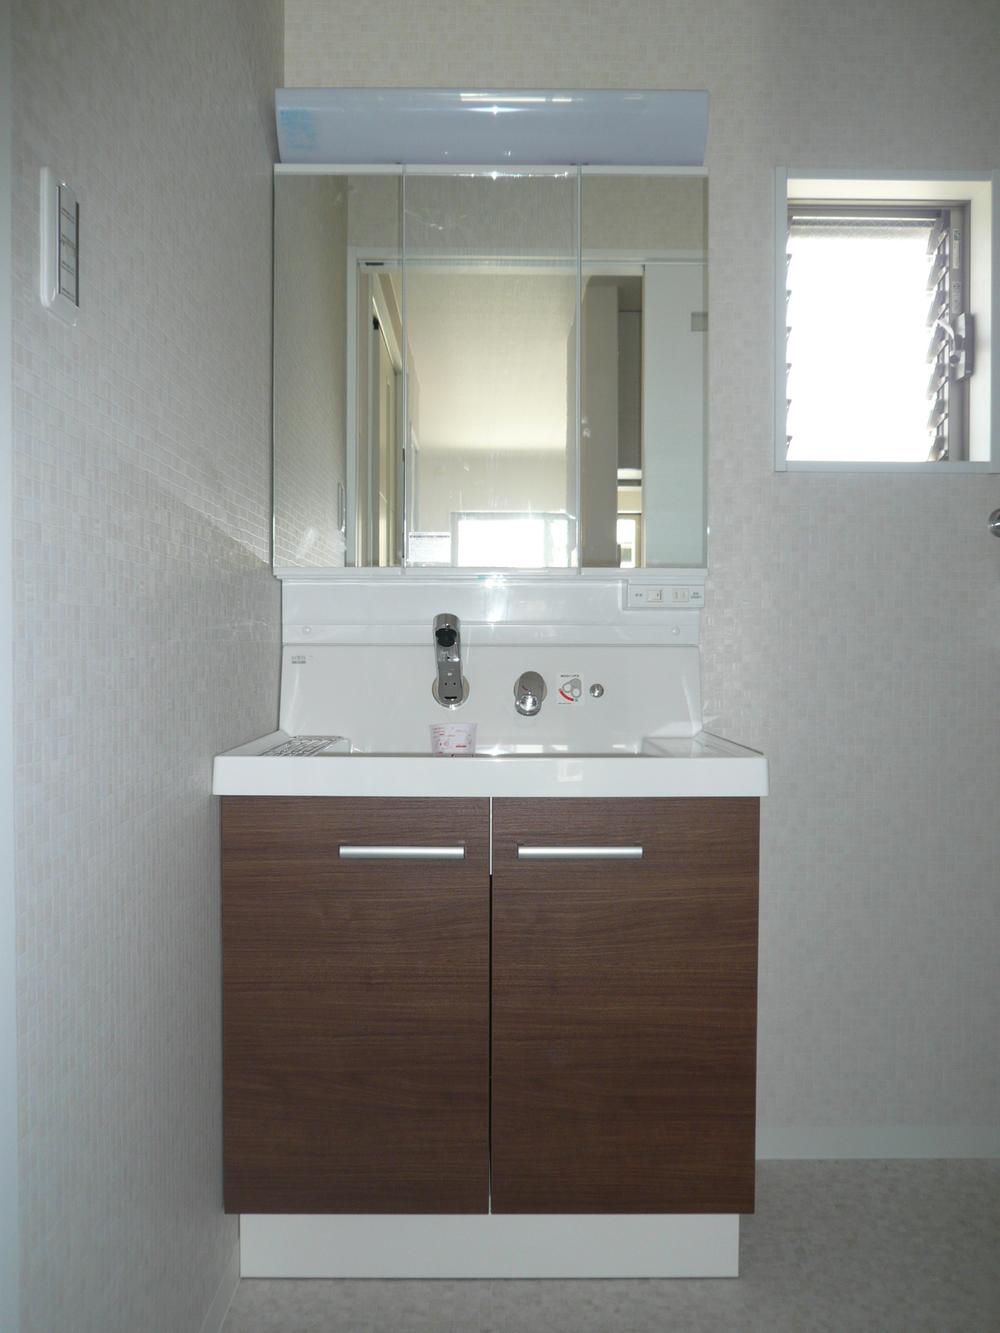 Wash basin, toilet. Same specification standard vanity